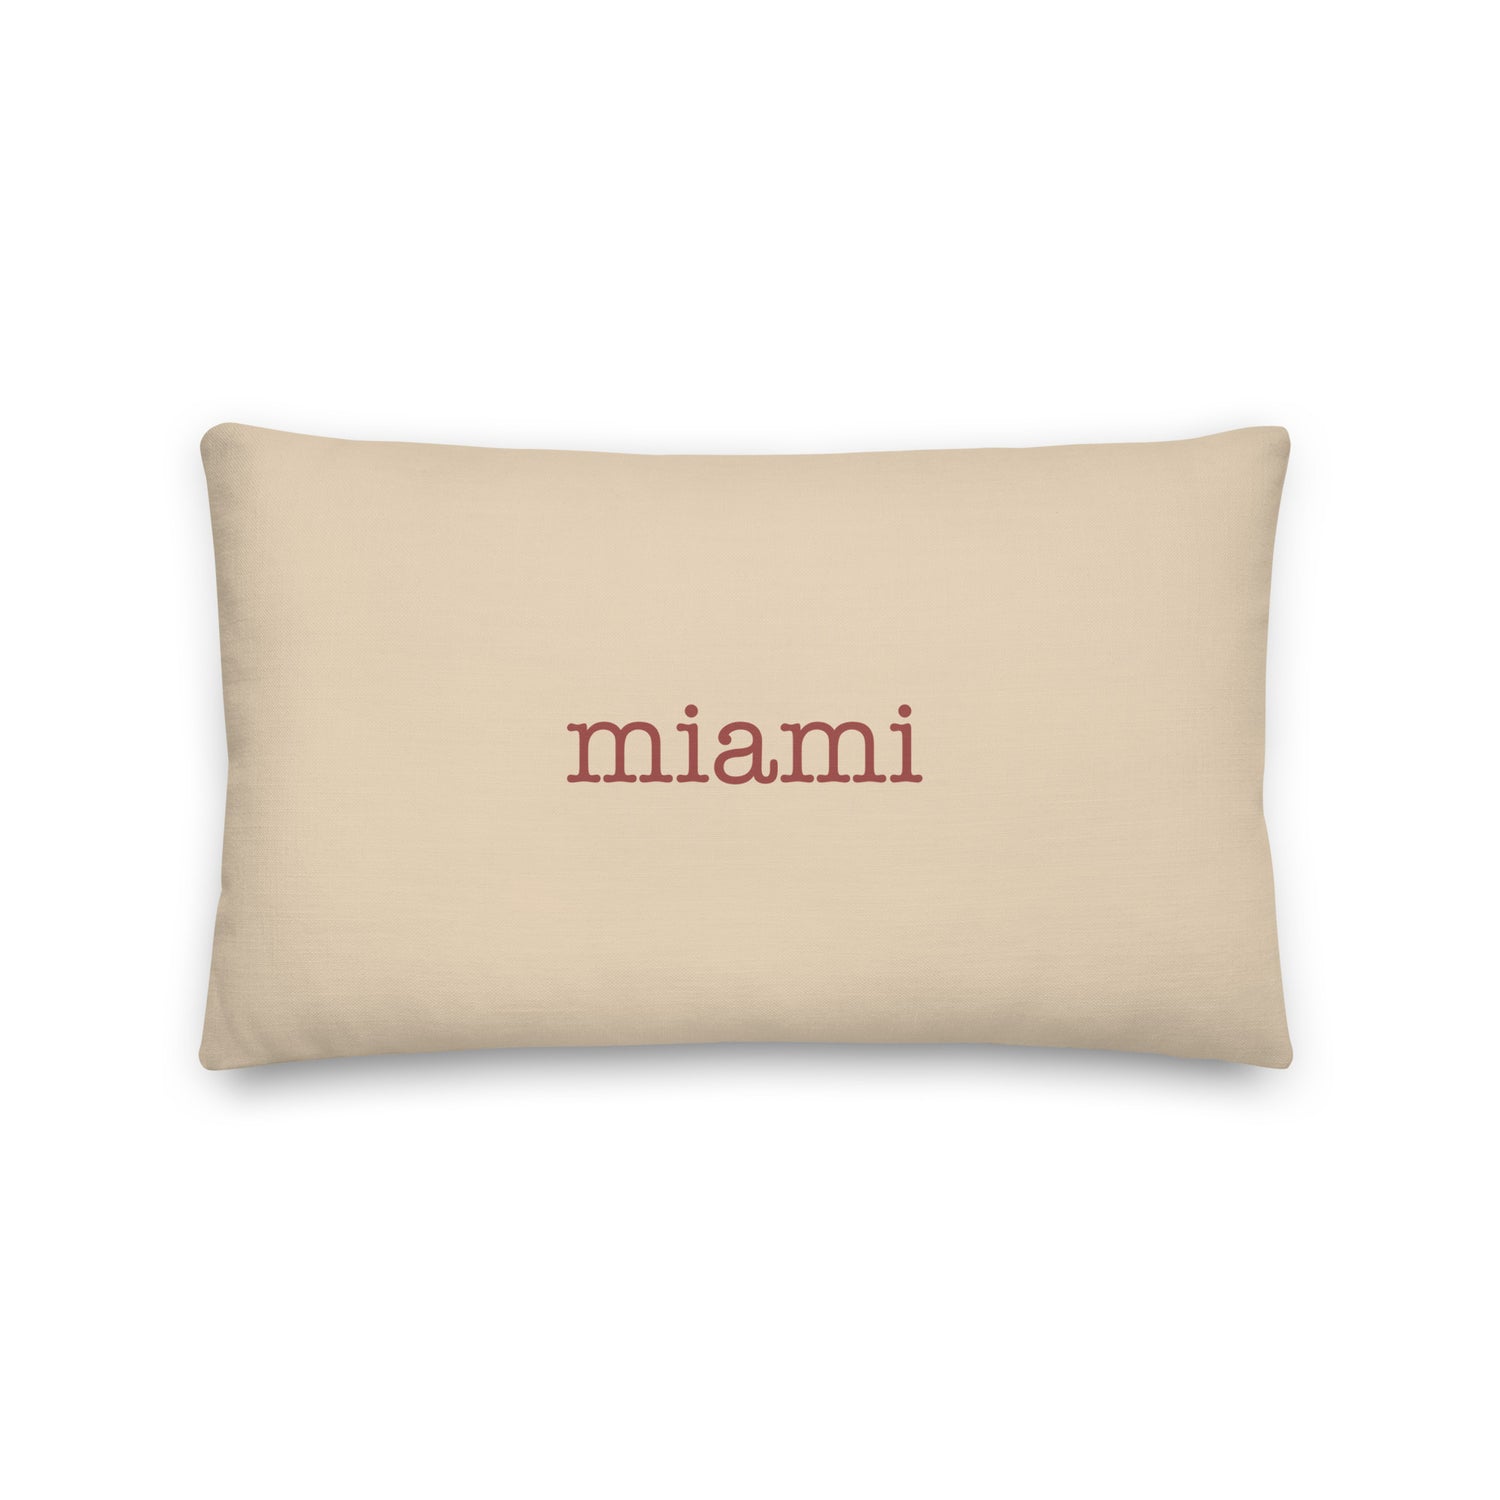 Miami Florida Pillows and Blankets • MIA Airport Code